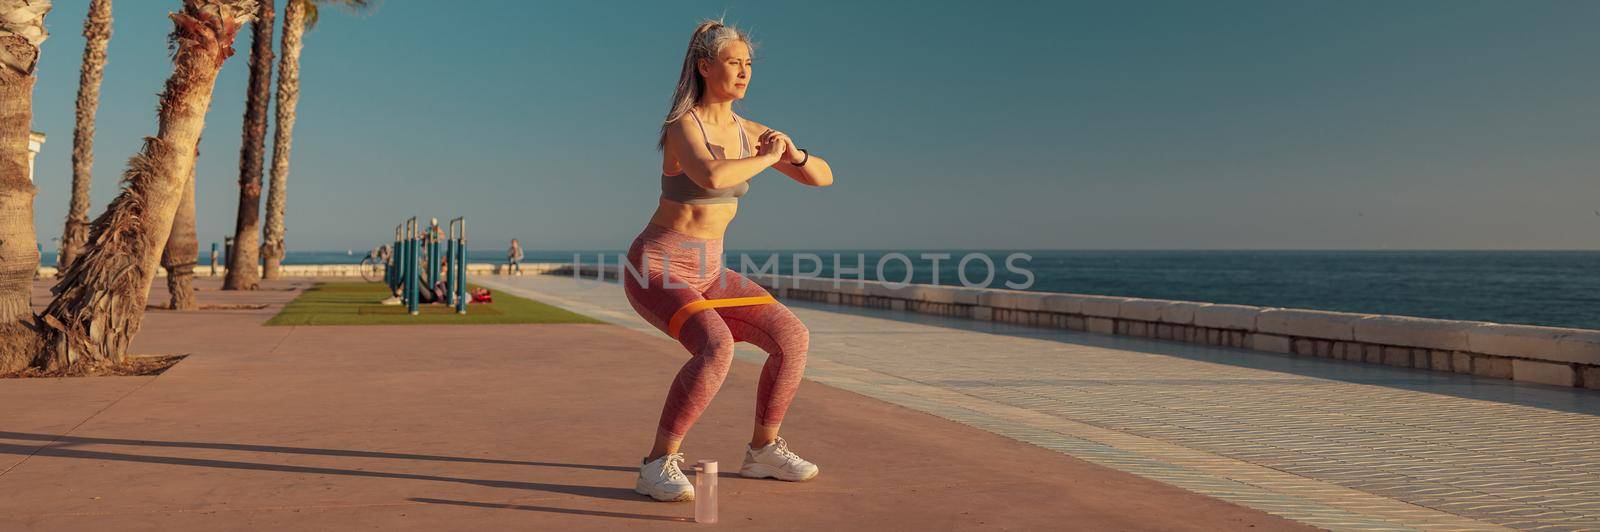 Female exercising on warm day by the coast by Yaroslav_astakhov